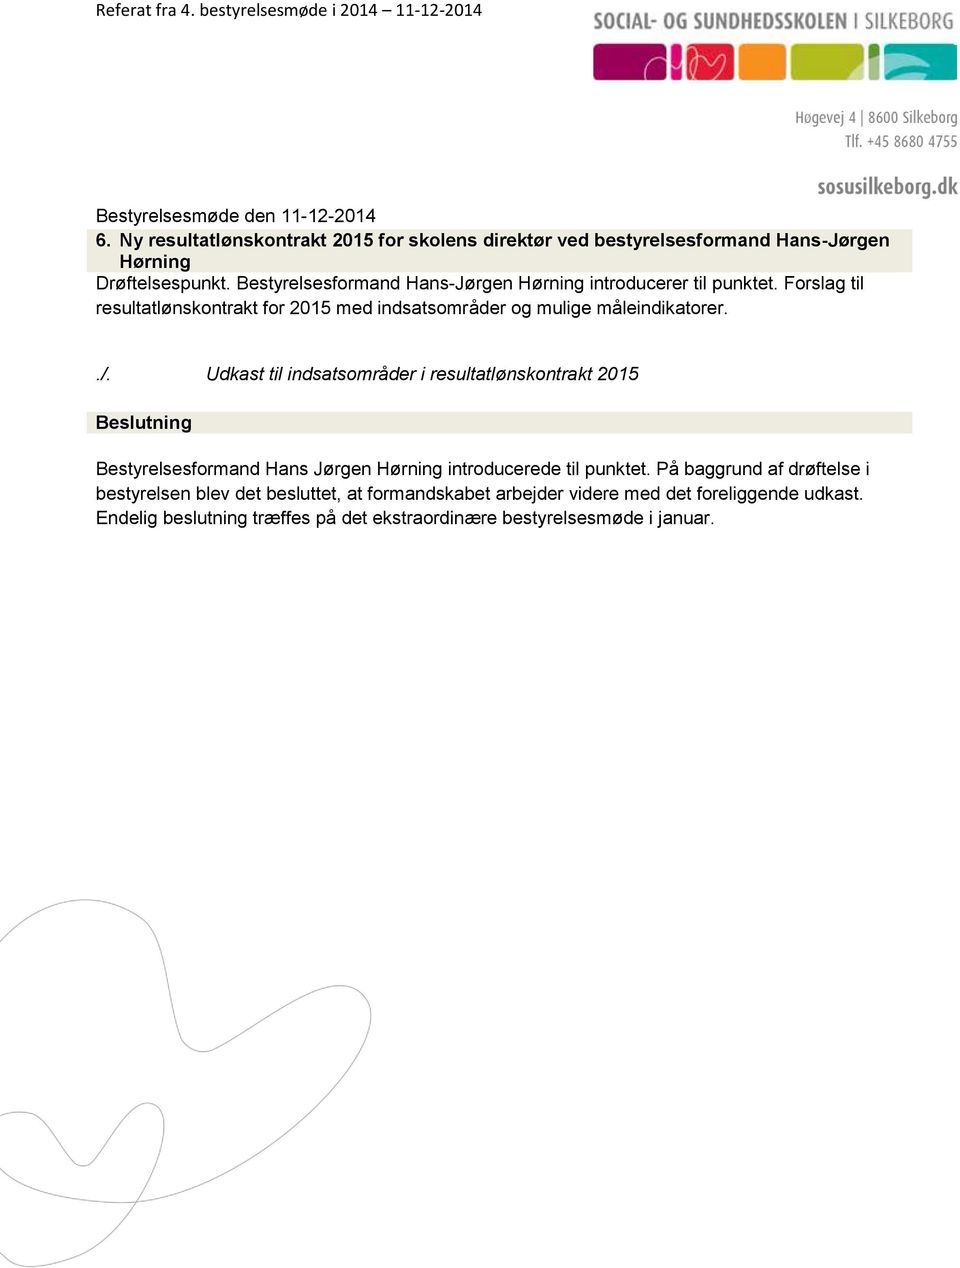 Forslag til resultatlønskontrakt for 2015 med indsatsområder og mulige måleindikatorer../.